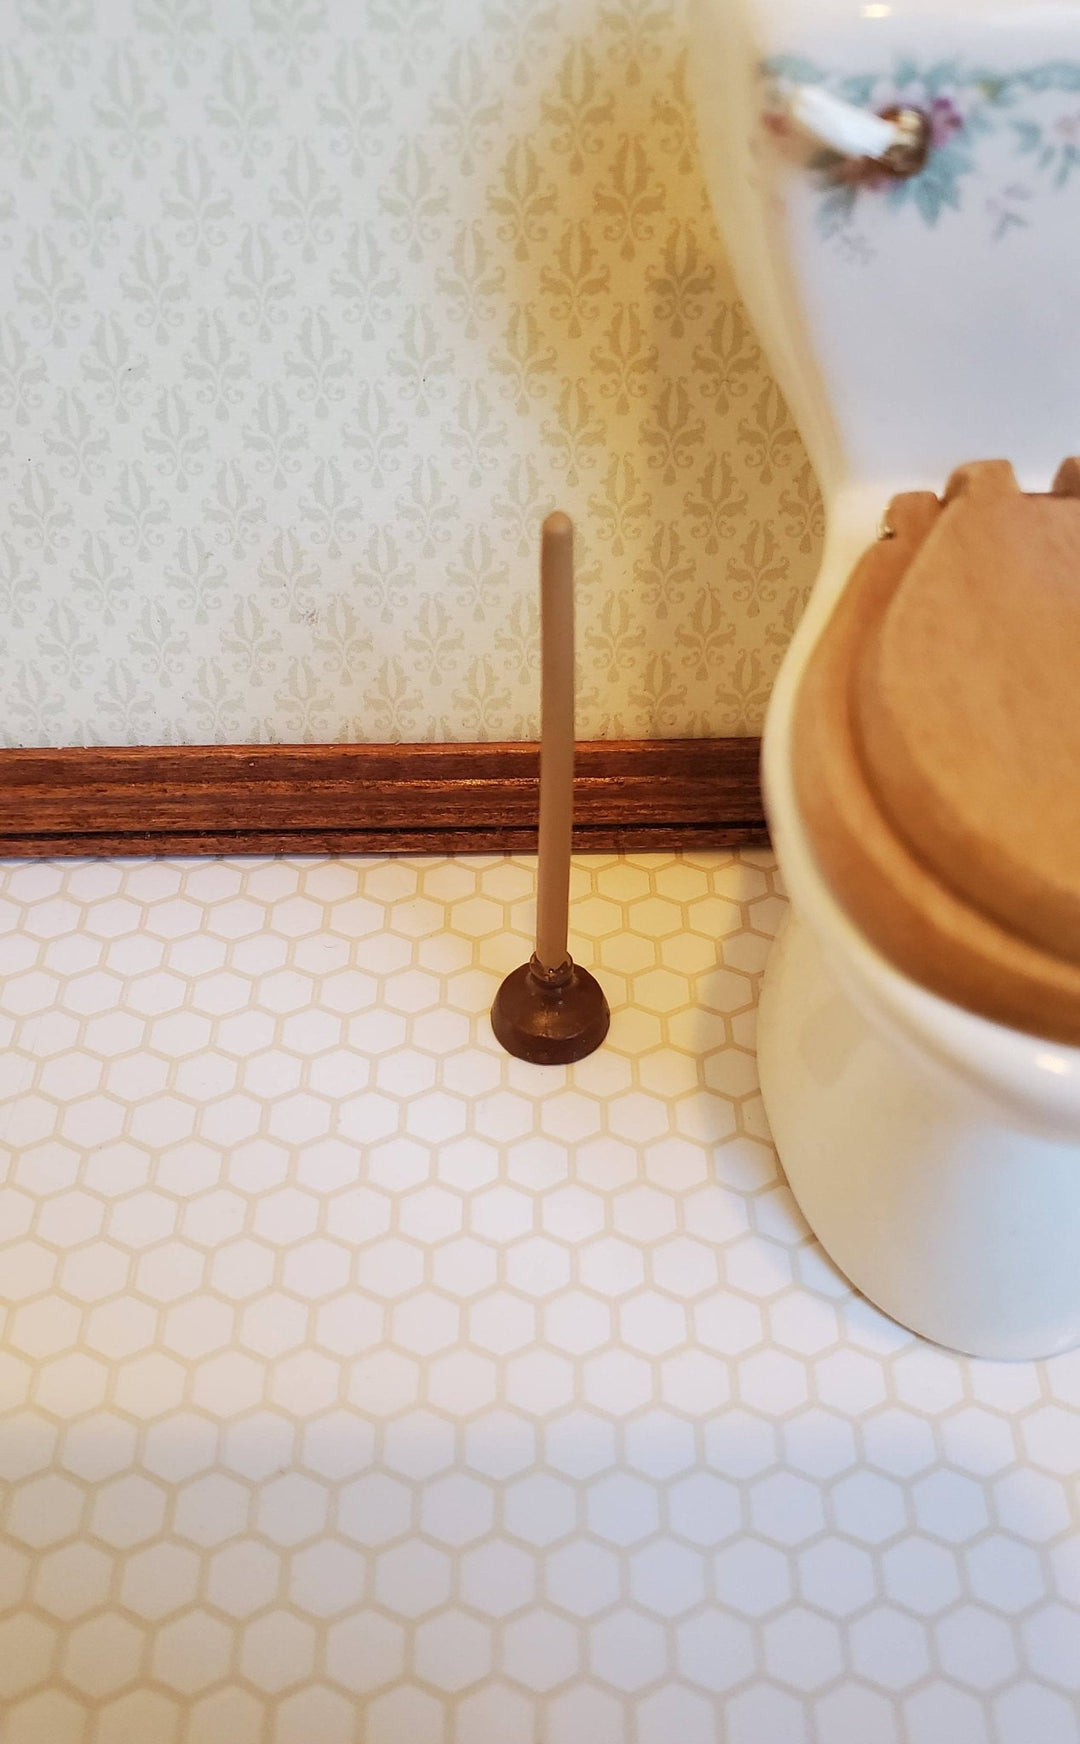 Dollhouse Miniature Toilet Plunger 1:12 Scale Bathroom Accessories - Miniature Crush